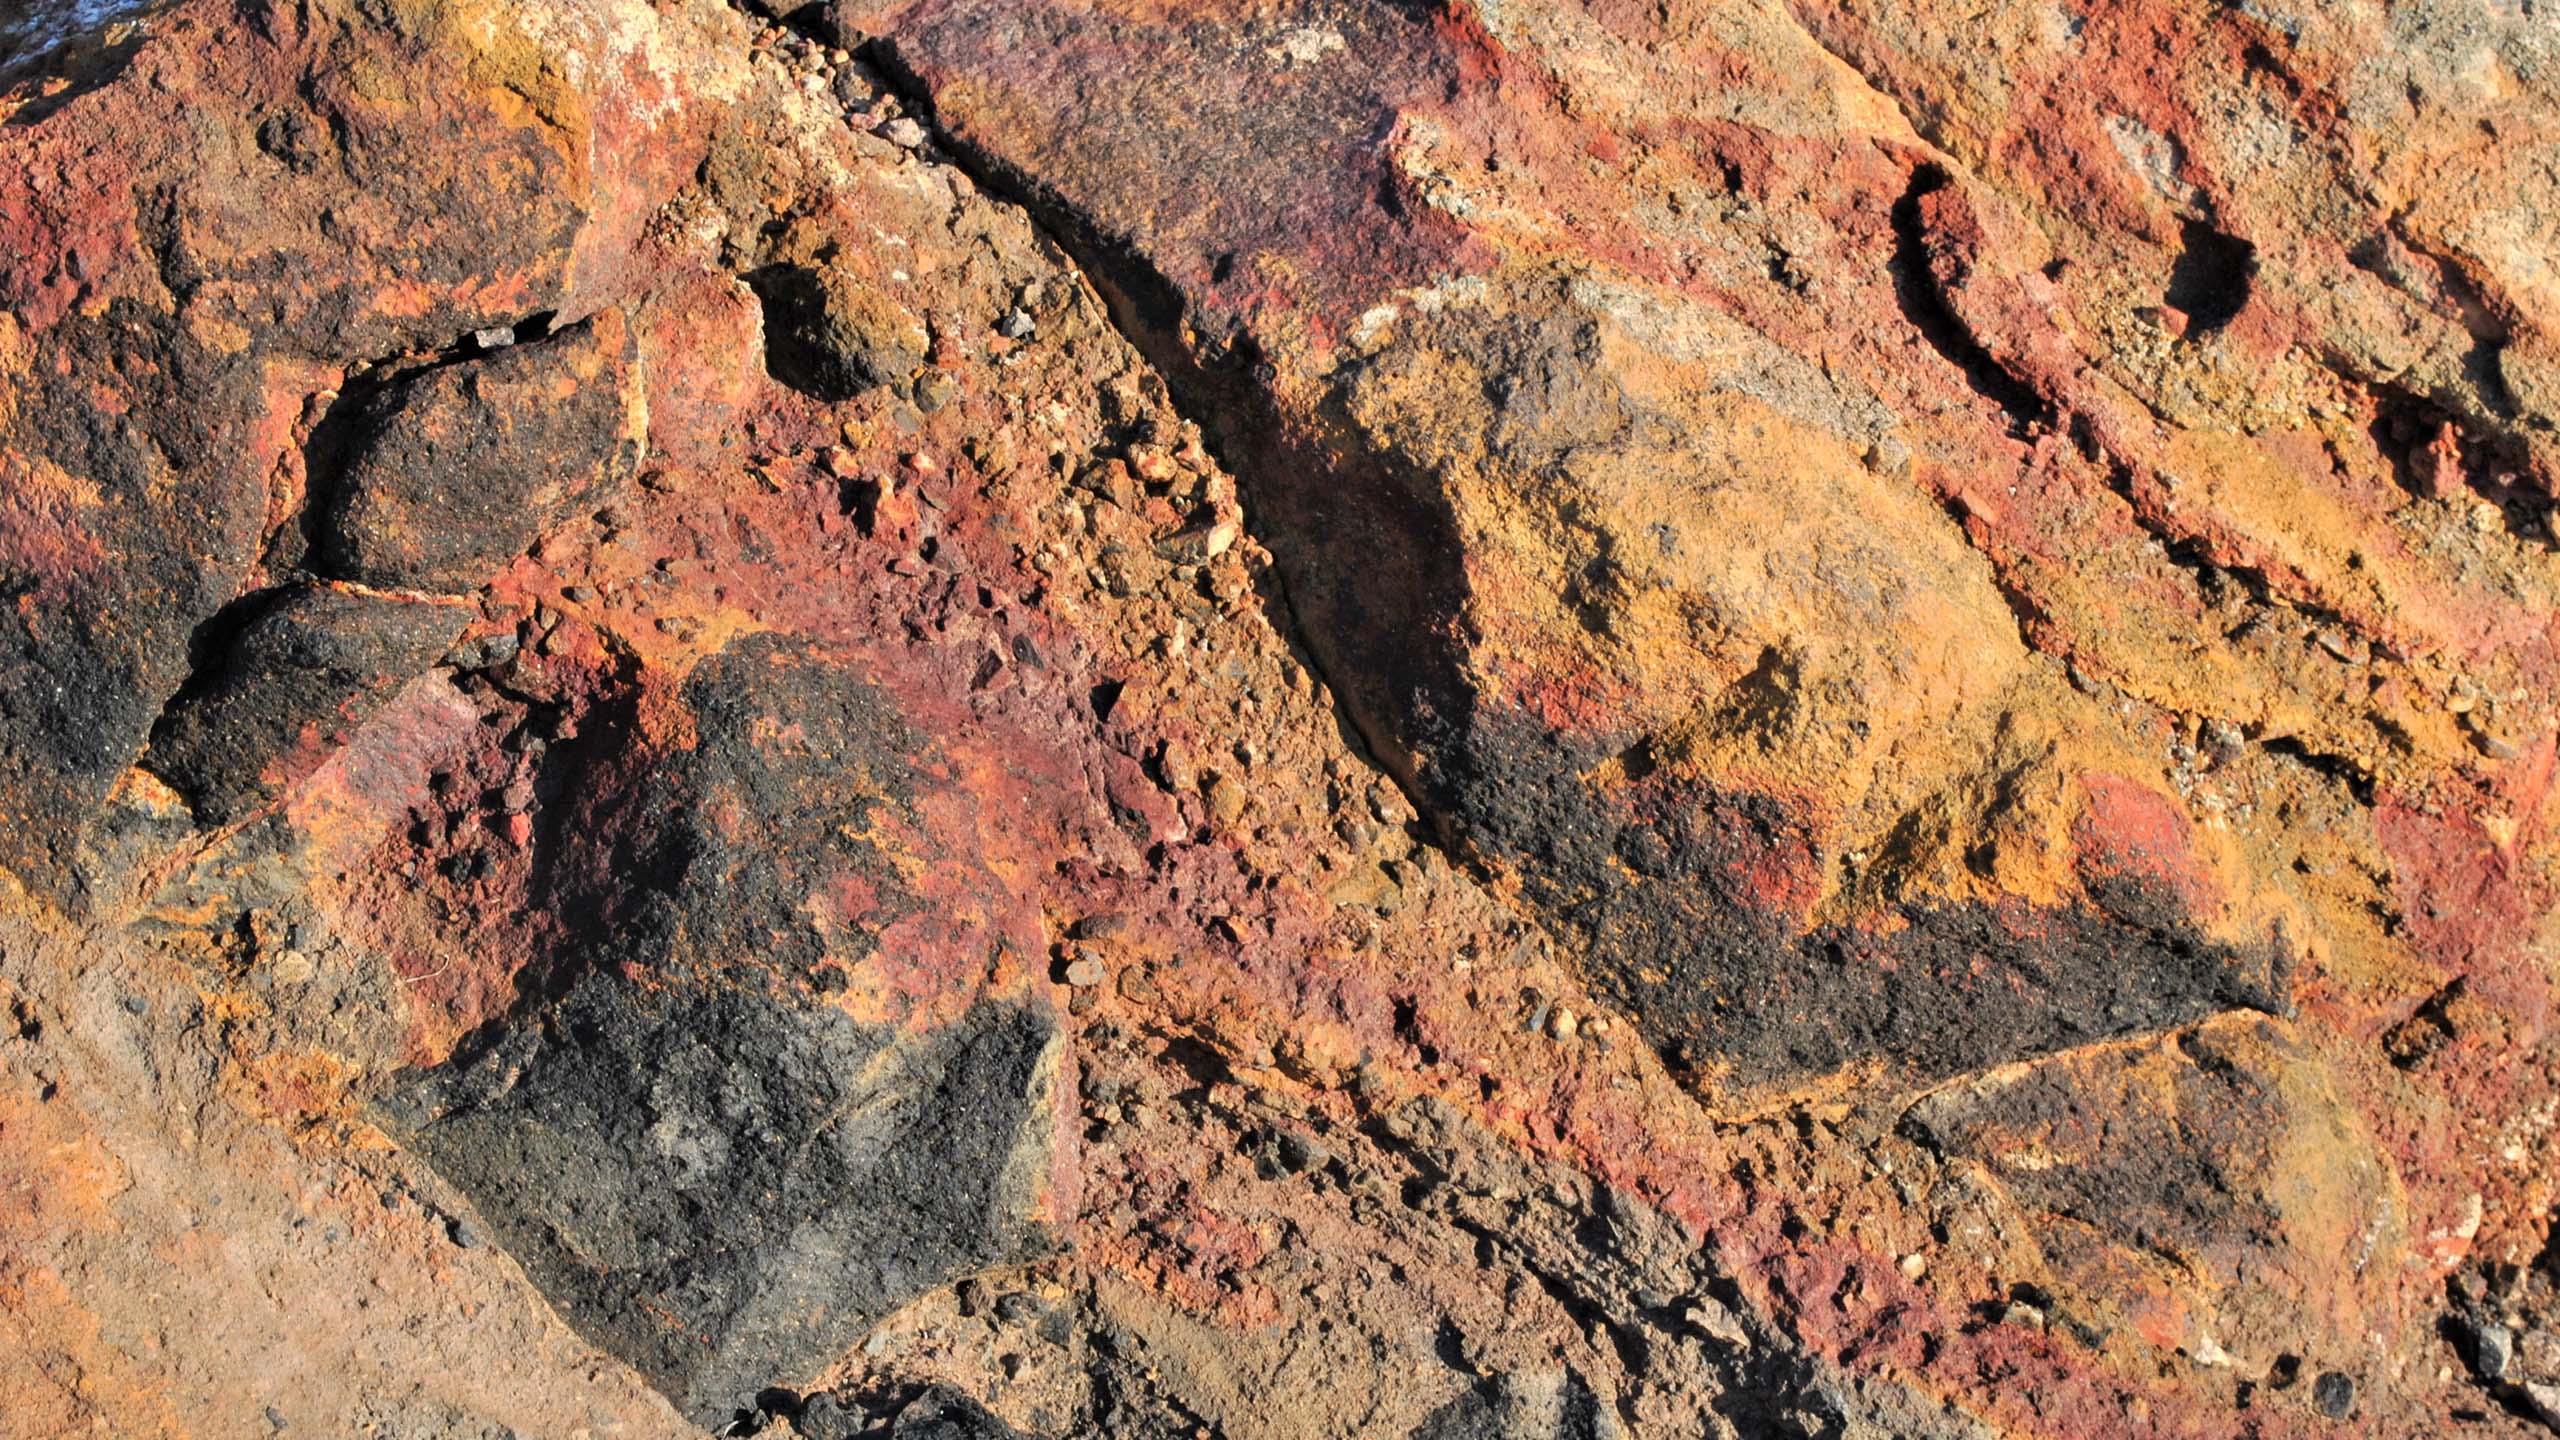 The colors of lava: Oxidation on the rocks of Nea Kameni creates colorful patterns